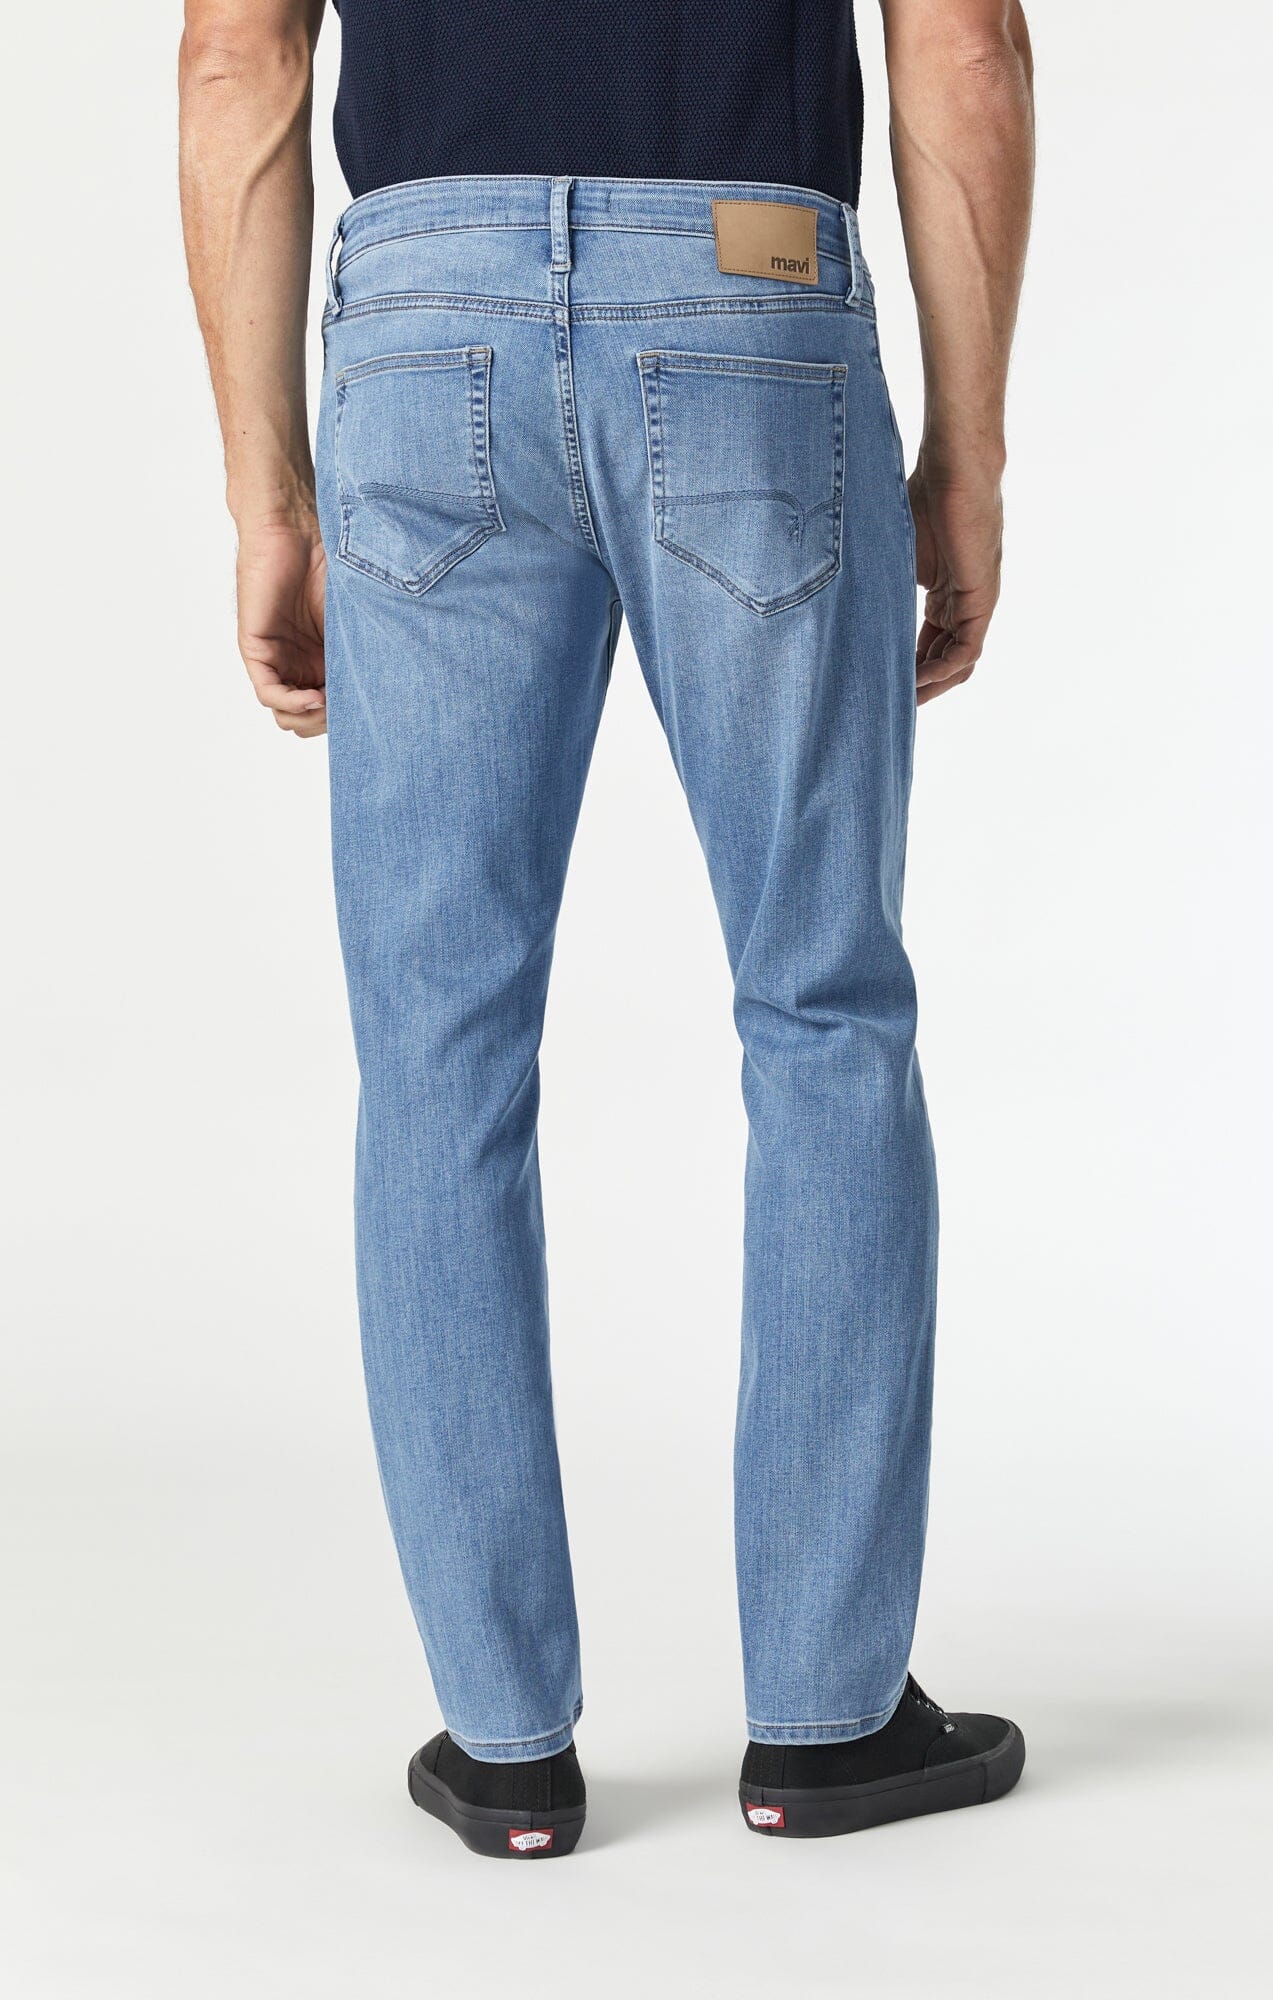 $148 NEW Mavi Jeans JAKE Slim Leg Stretch Light Brushed Feather